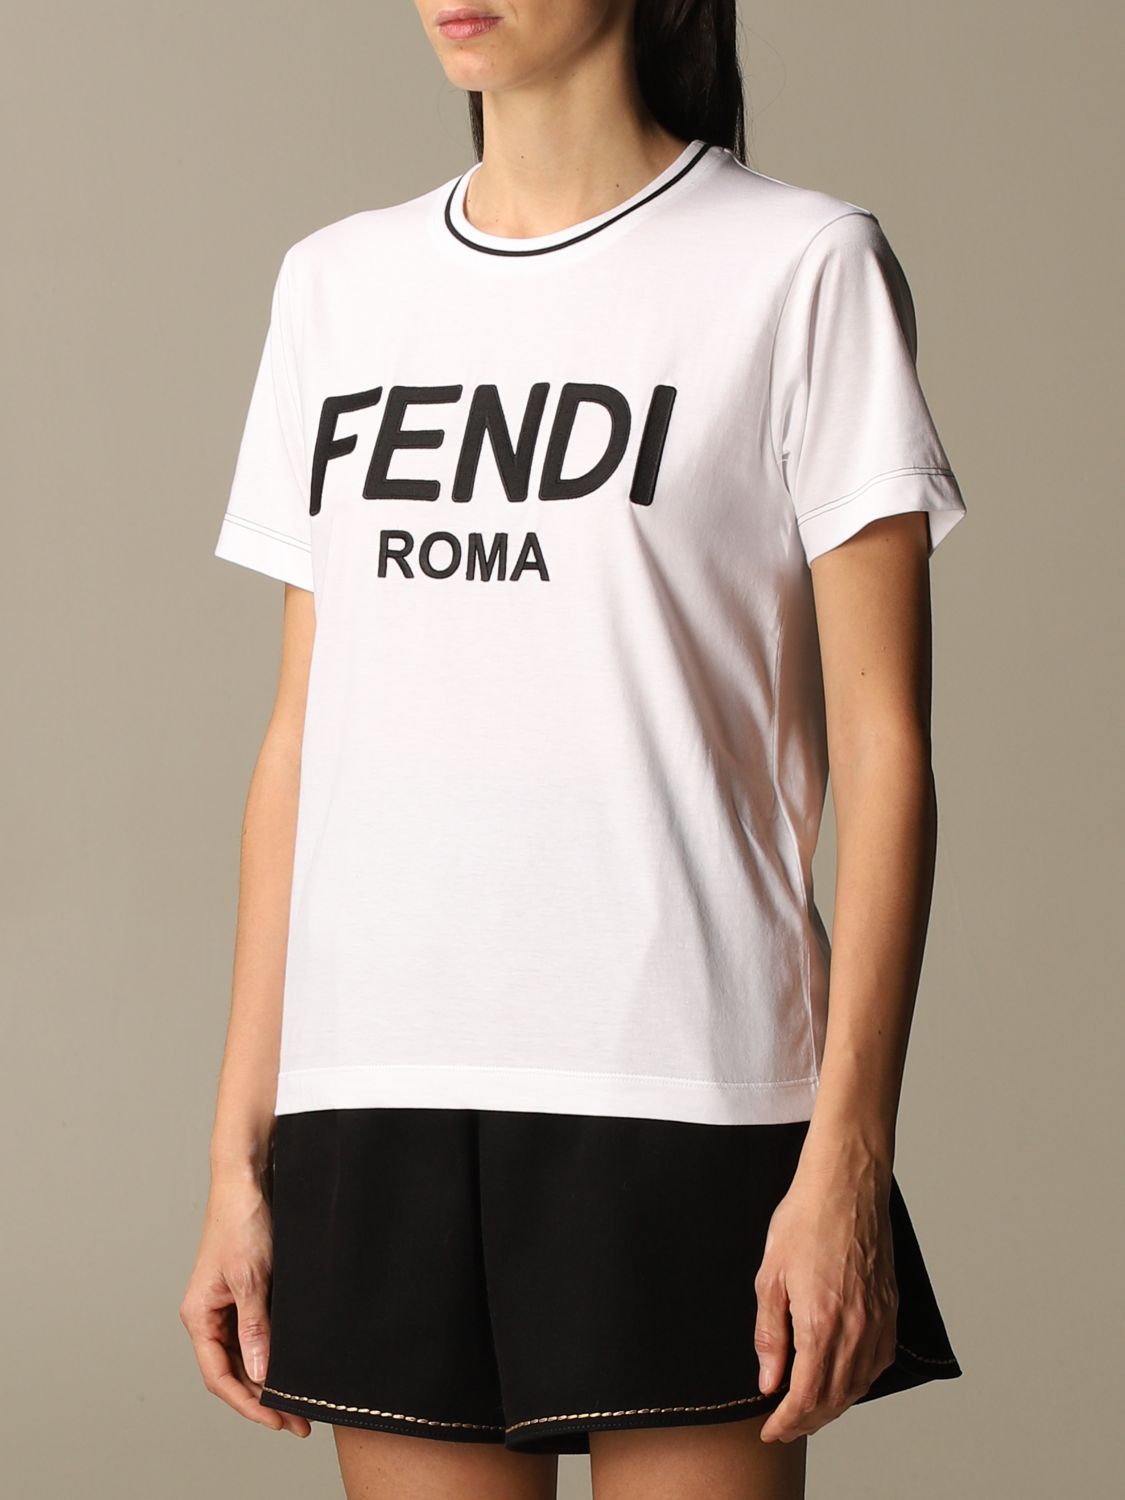 FENDI: T-shirt with Roma logo - White | T-Shirt Fendi FS7254 AC6B ...